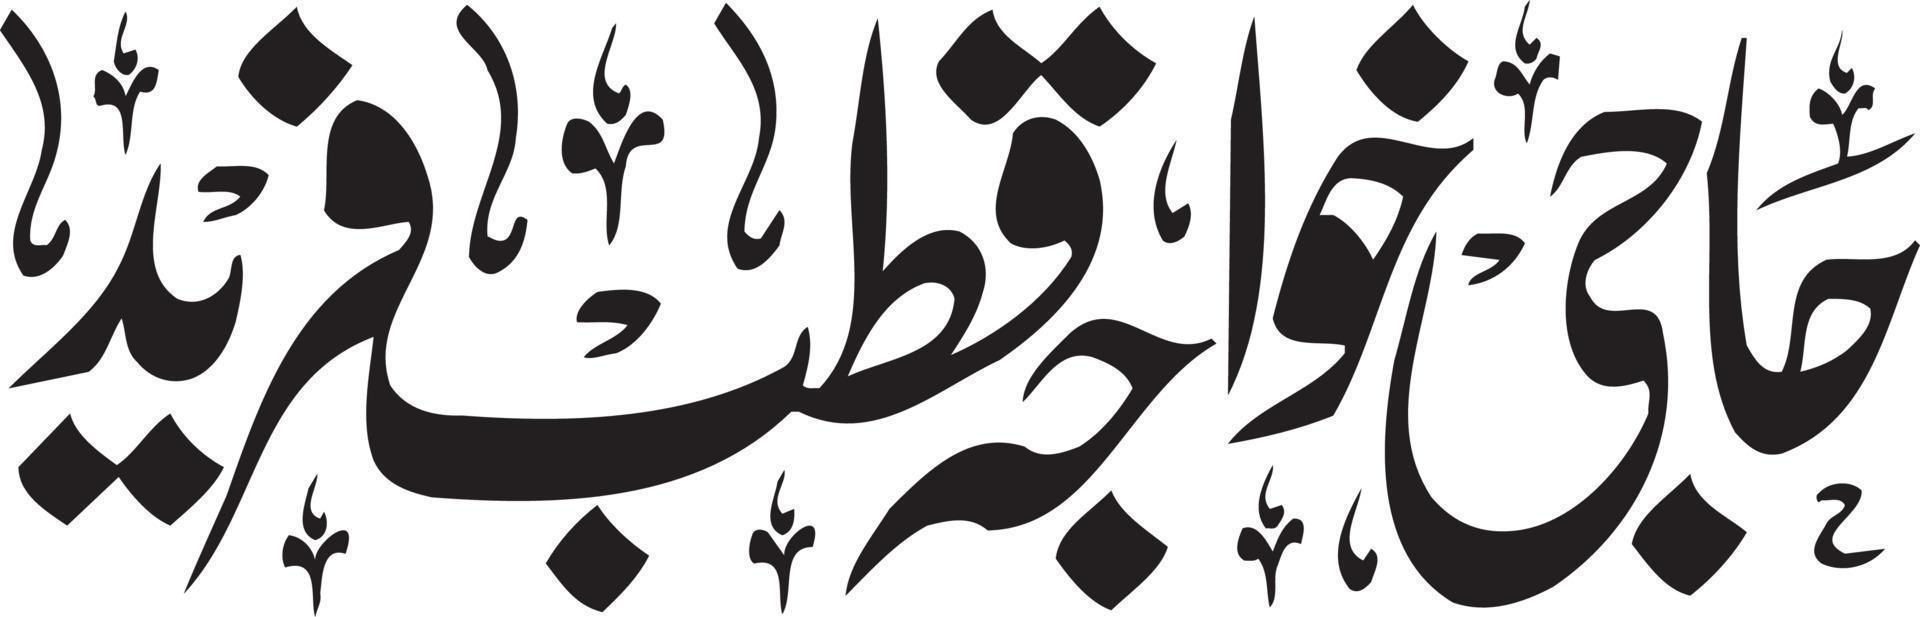 hagi khawaga qatab liberato islamico urdu calligrafia gratuito vettore